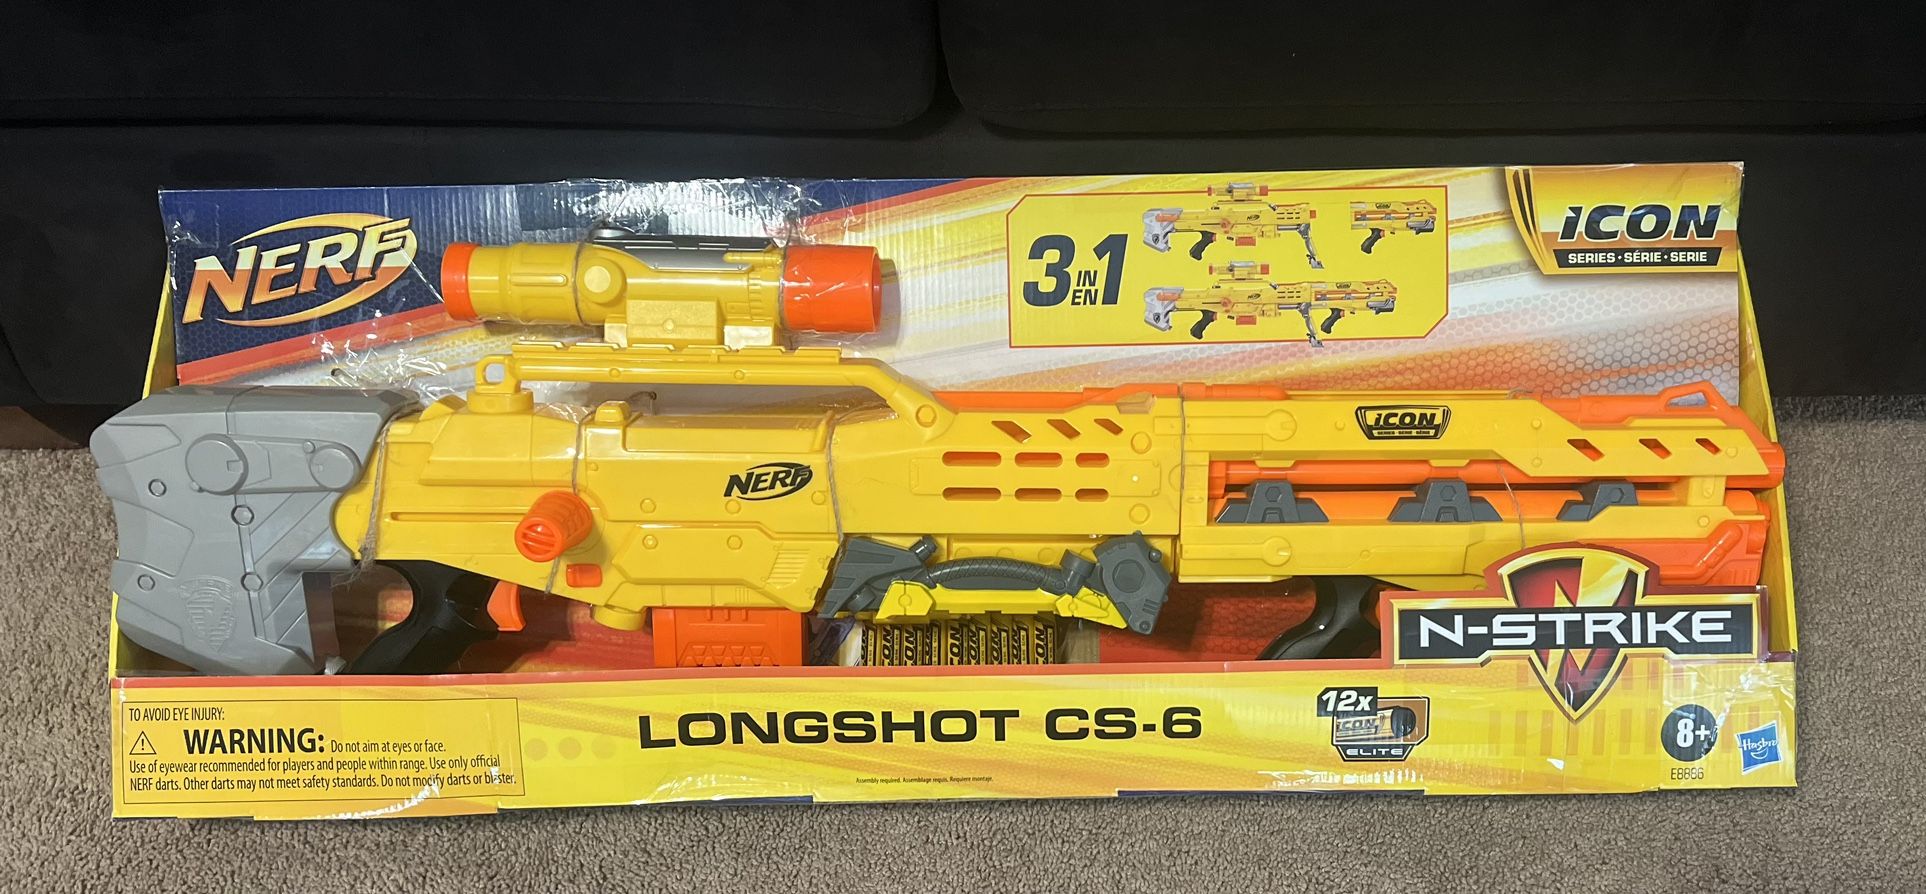 Toy Gun For Kids 